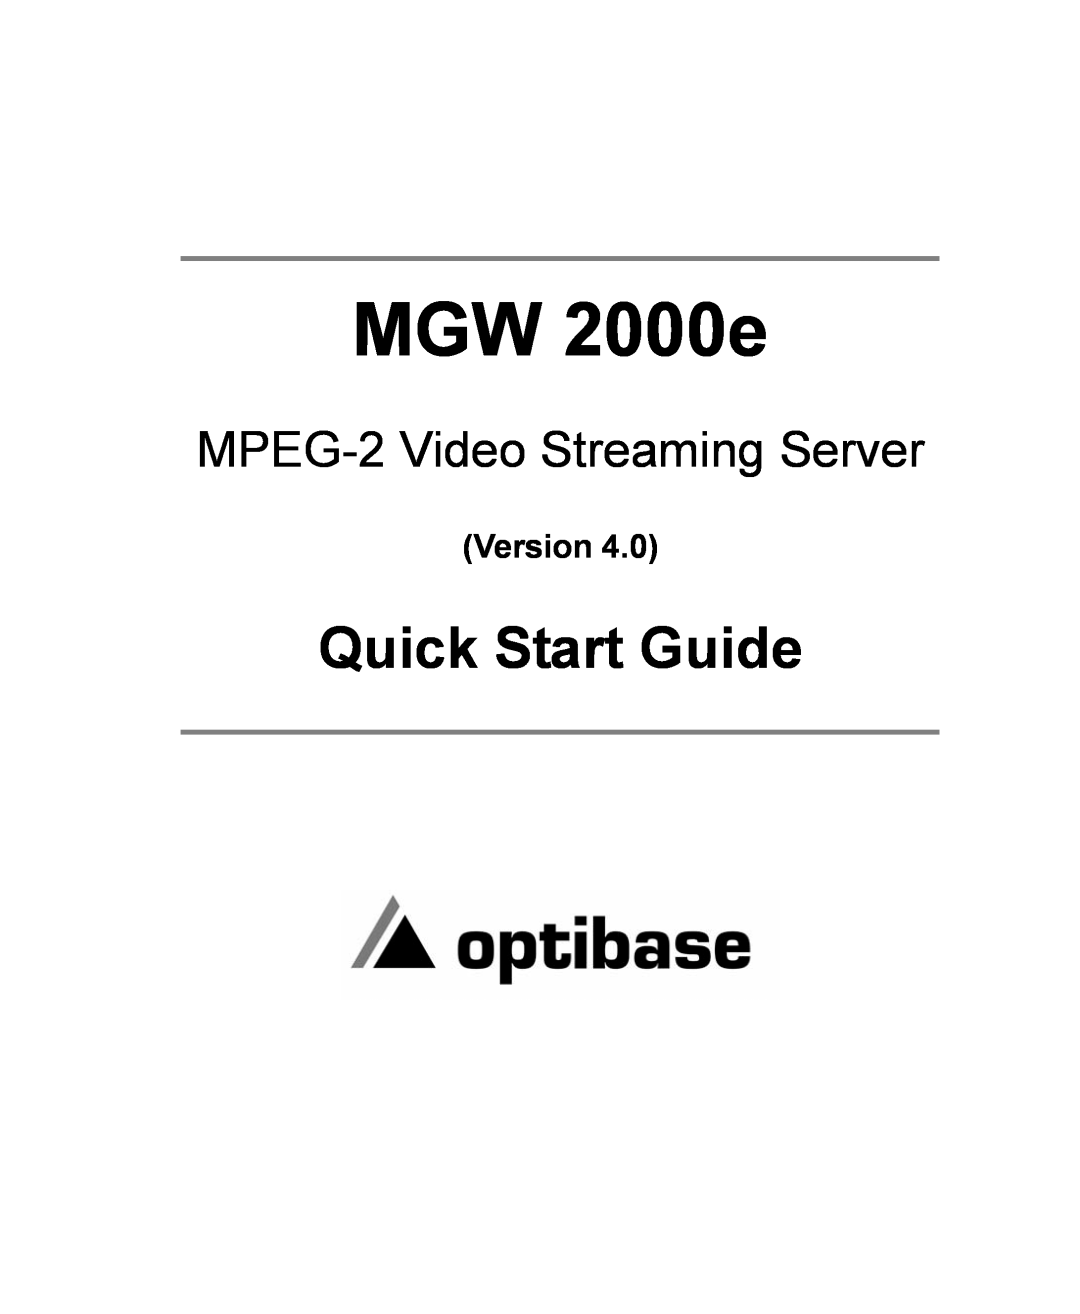 Optibase MGW 2000e quick start Quick Start Guide, MPEG-2 Video Streaming Server, Version 